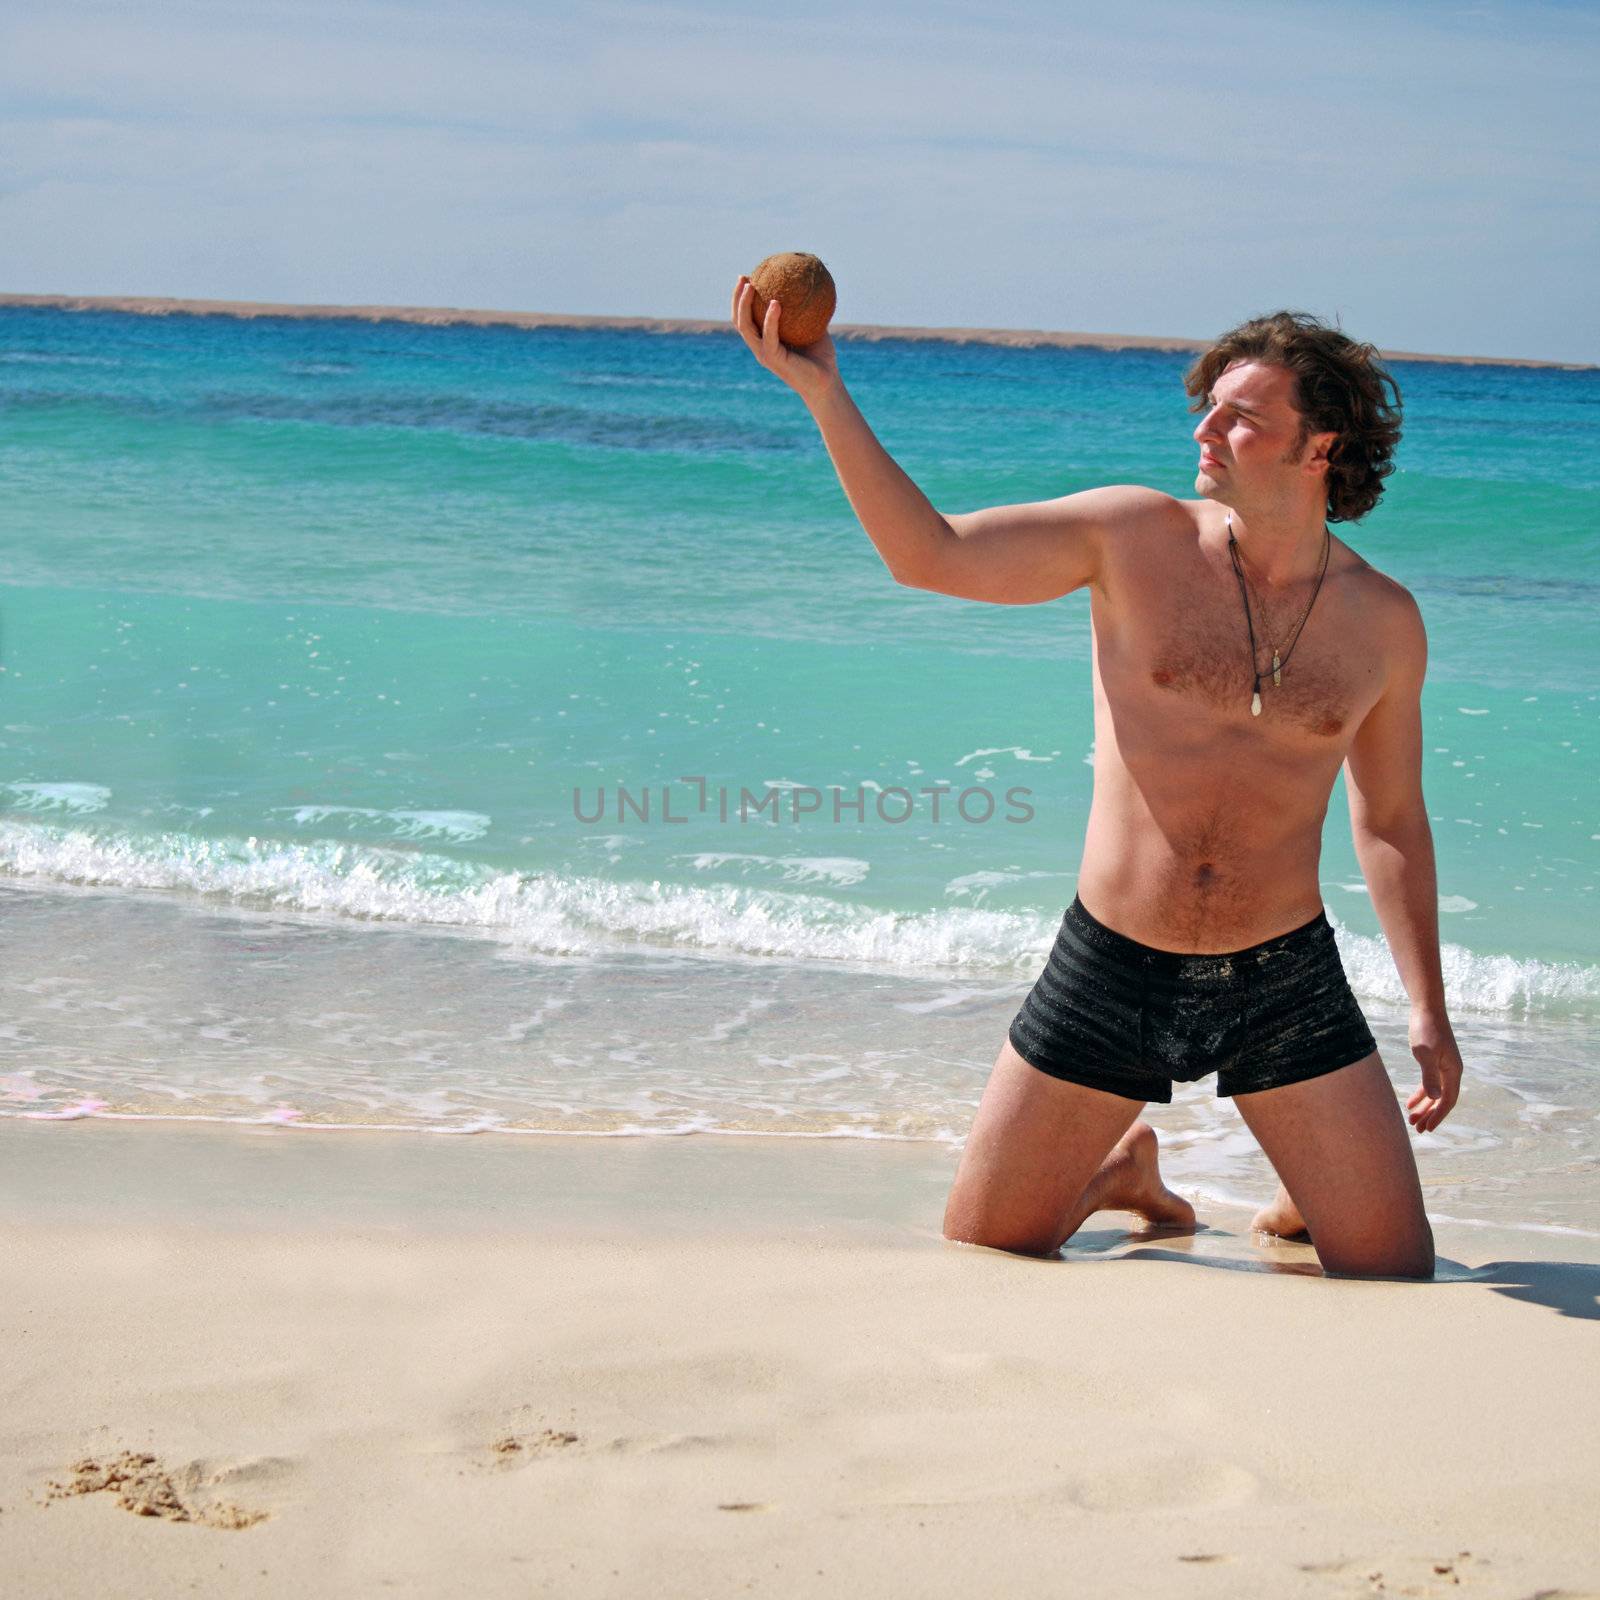 Man posing on beach by photochecker